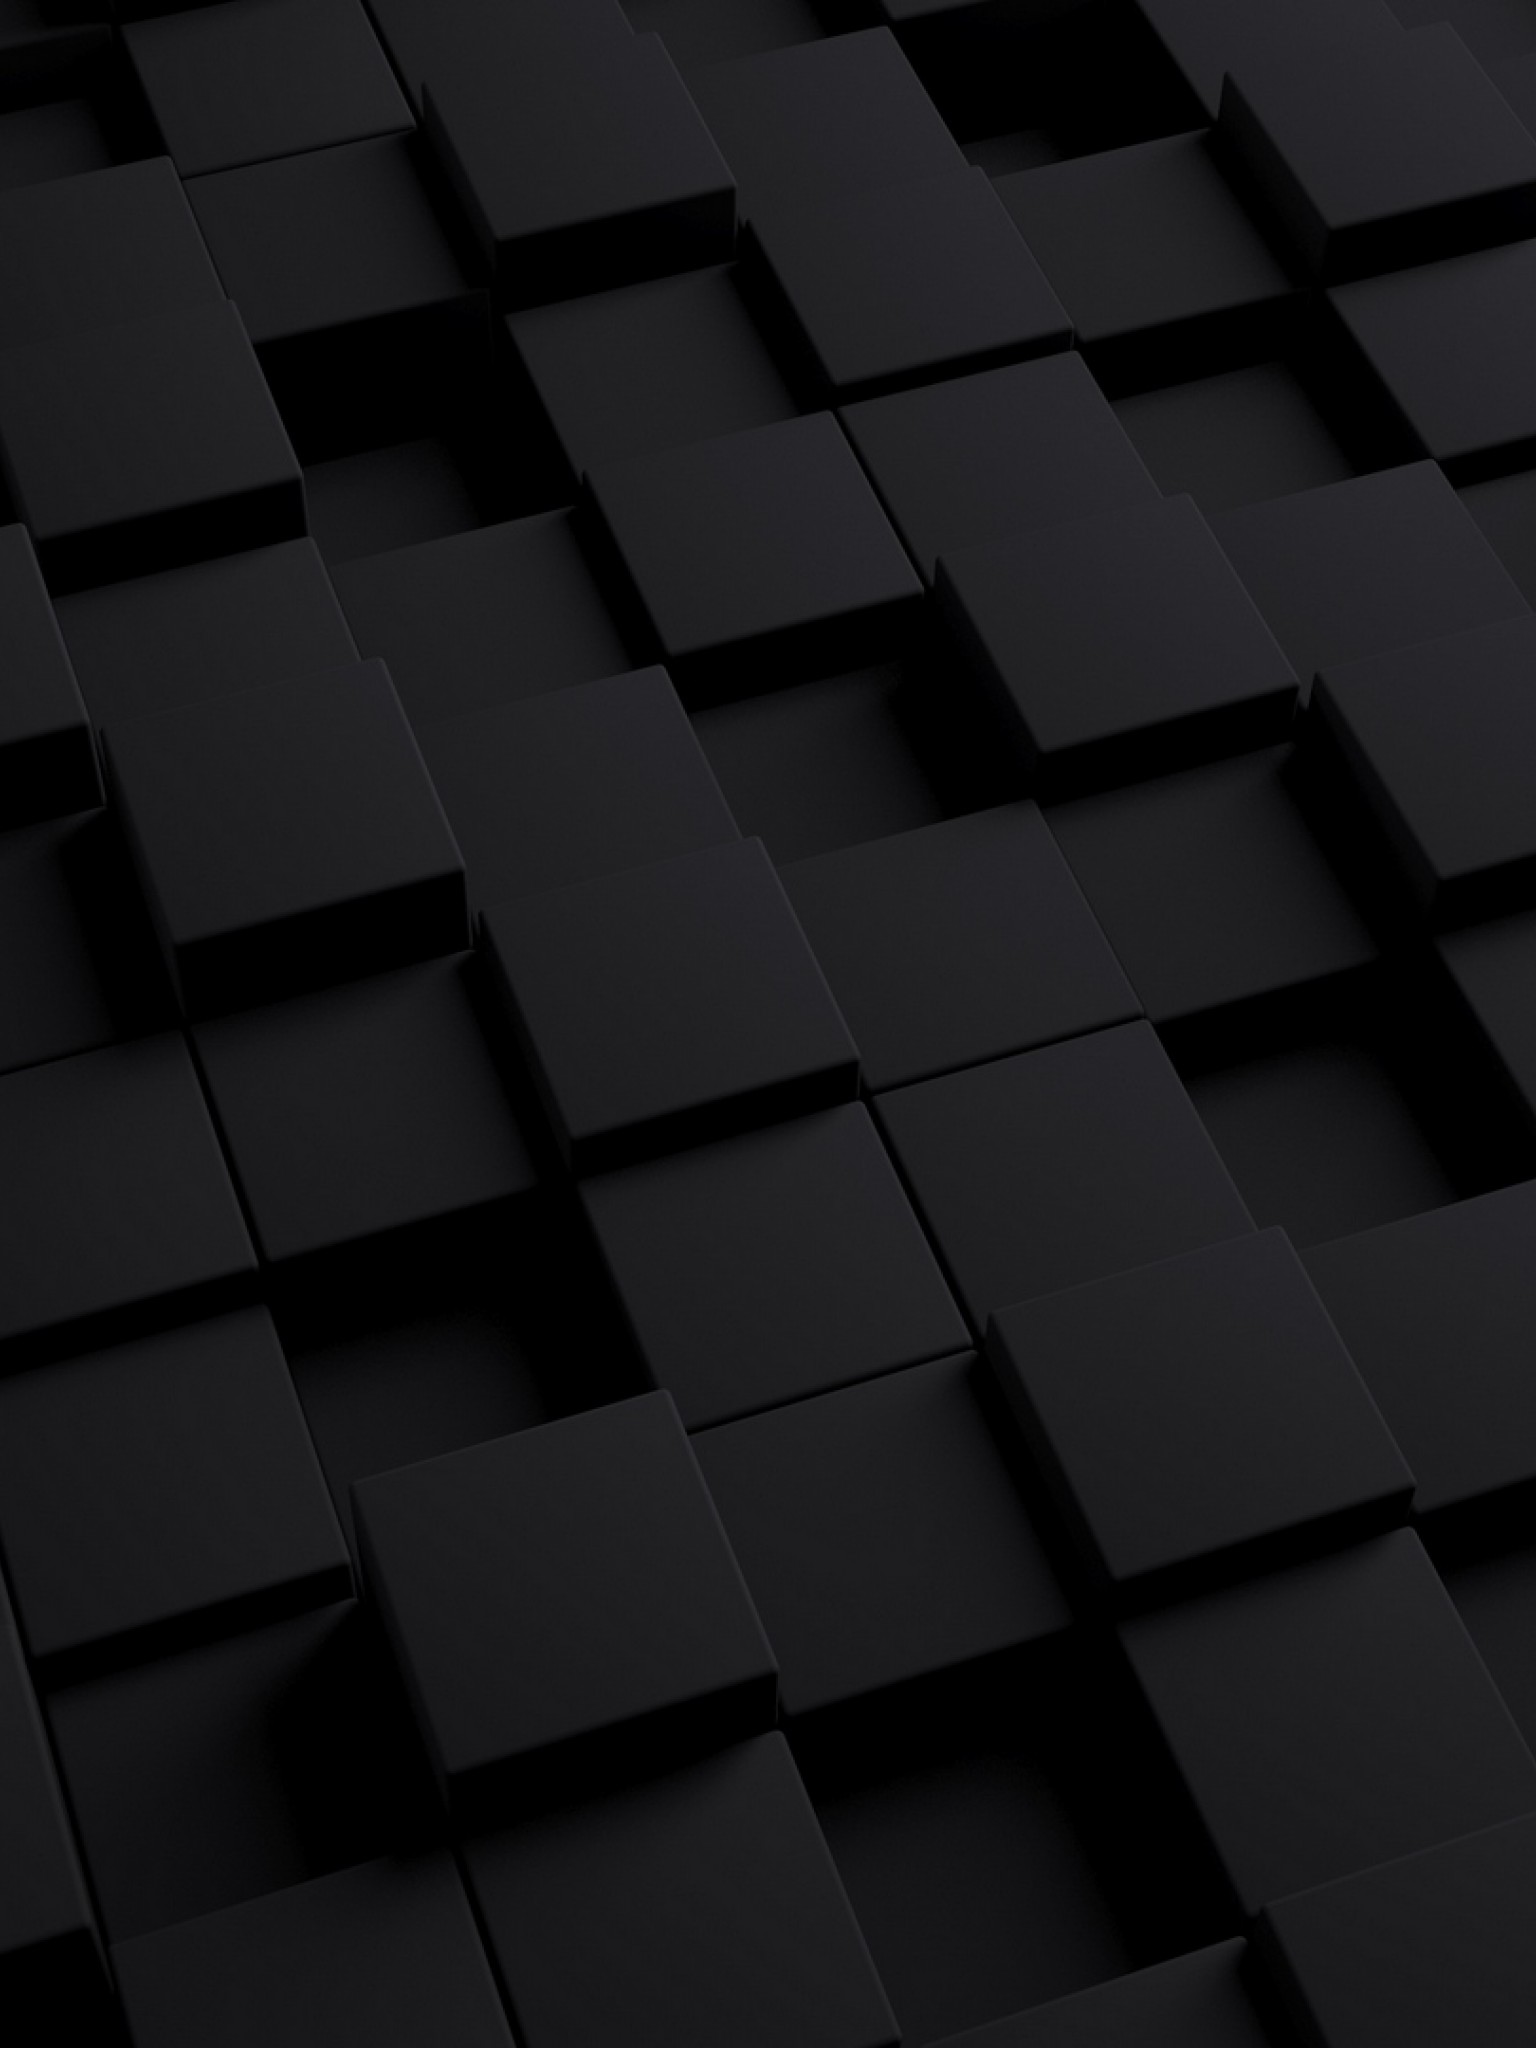 Black cubes structure HD Wallpaper Retina iPad - HD Wallpaper - Wallpapers .net